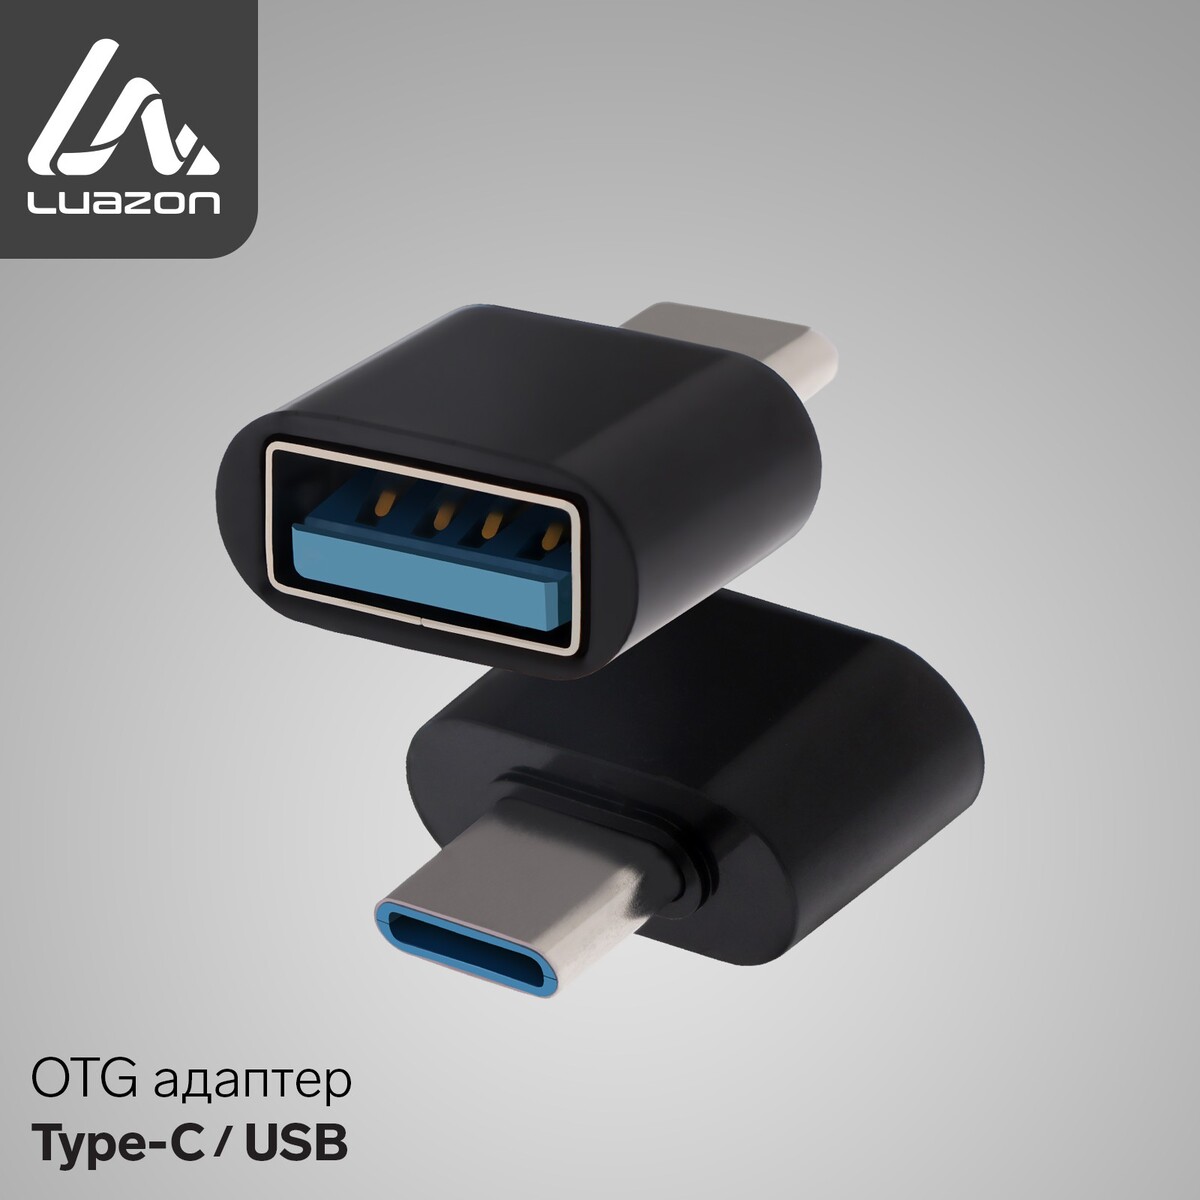 Otg адаптер luazon type-c - usb, цвет черный bluetooth адаптер digma d bt400u c вер 4 0 type с чёрный